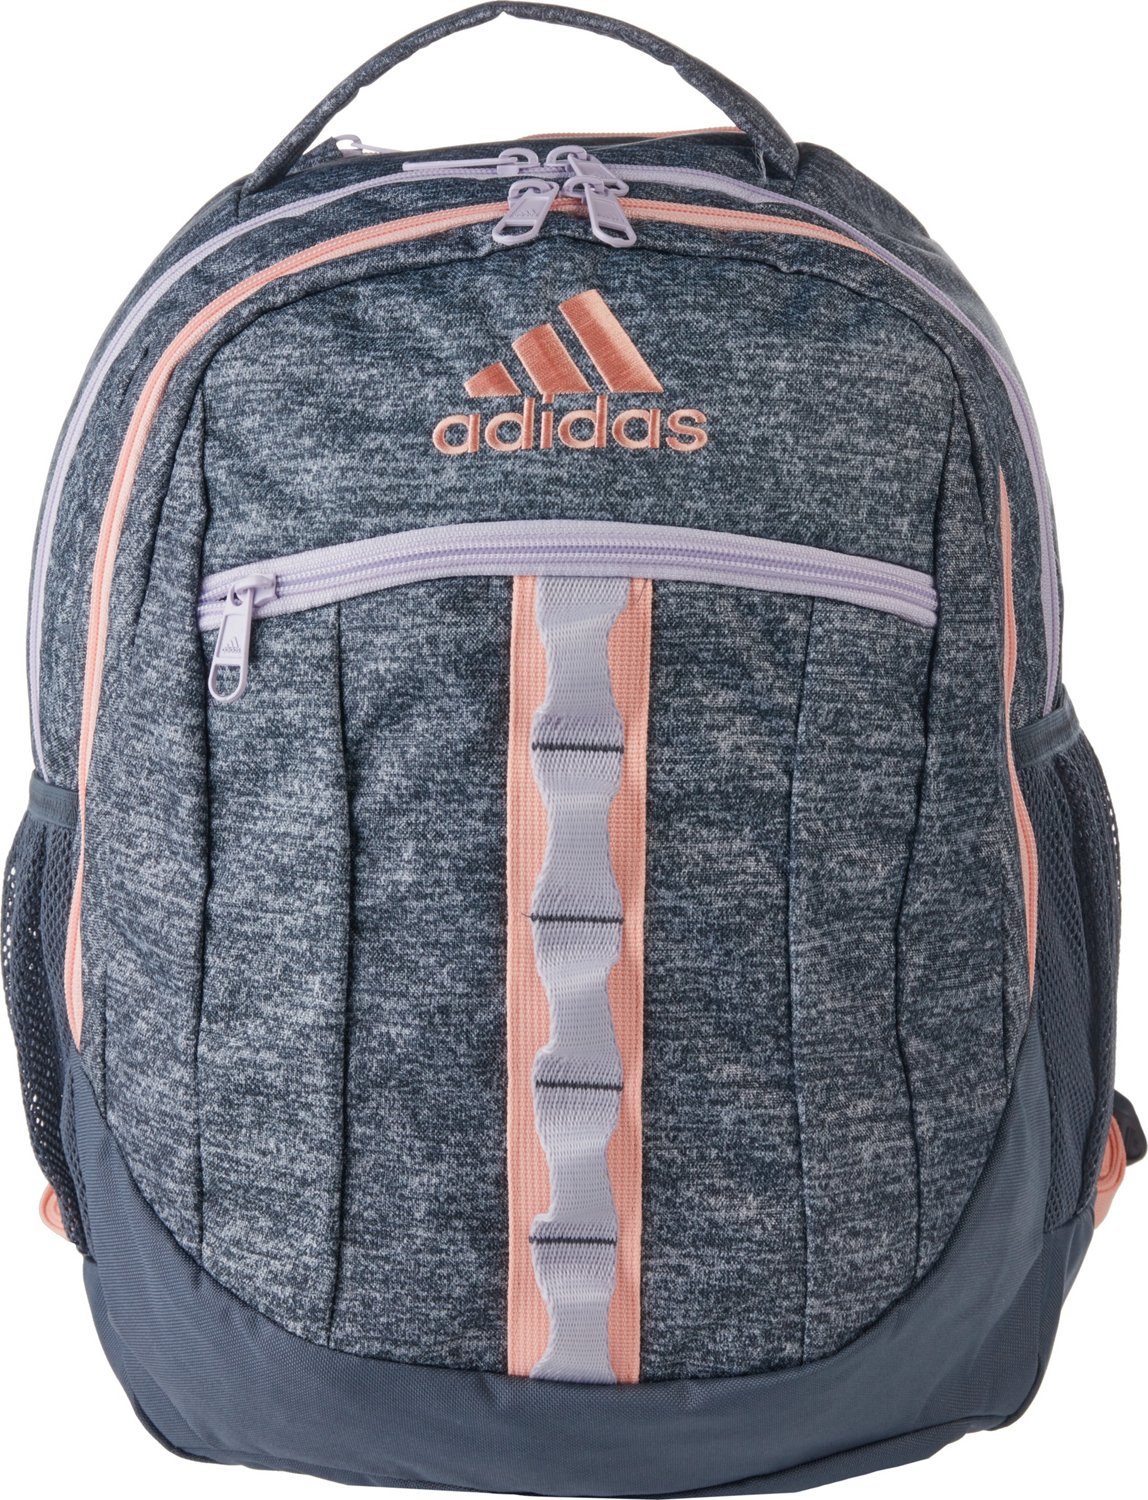 adidas Backpacks \u0026 Book Bags For School 